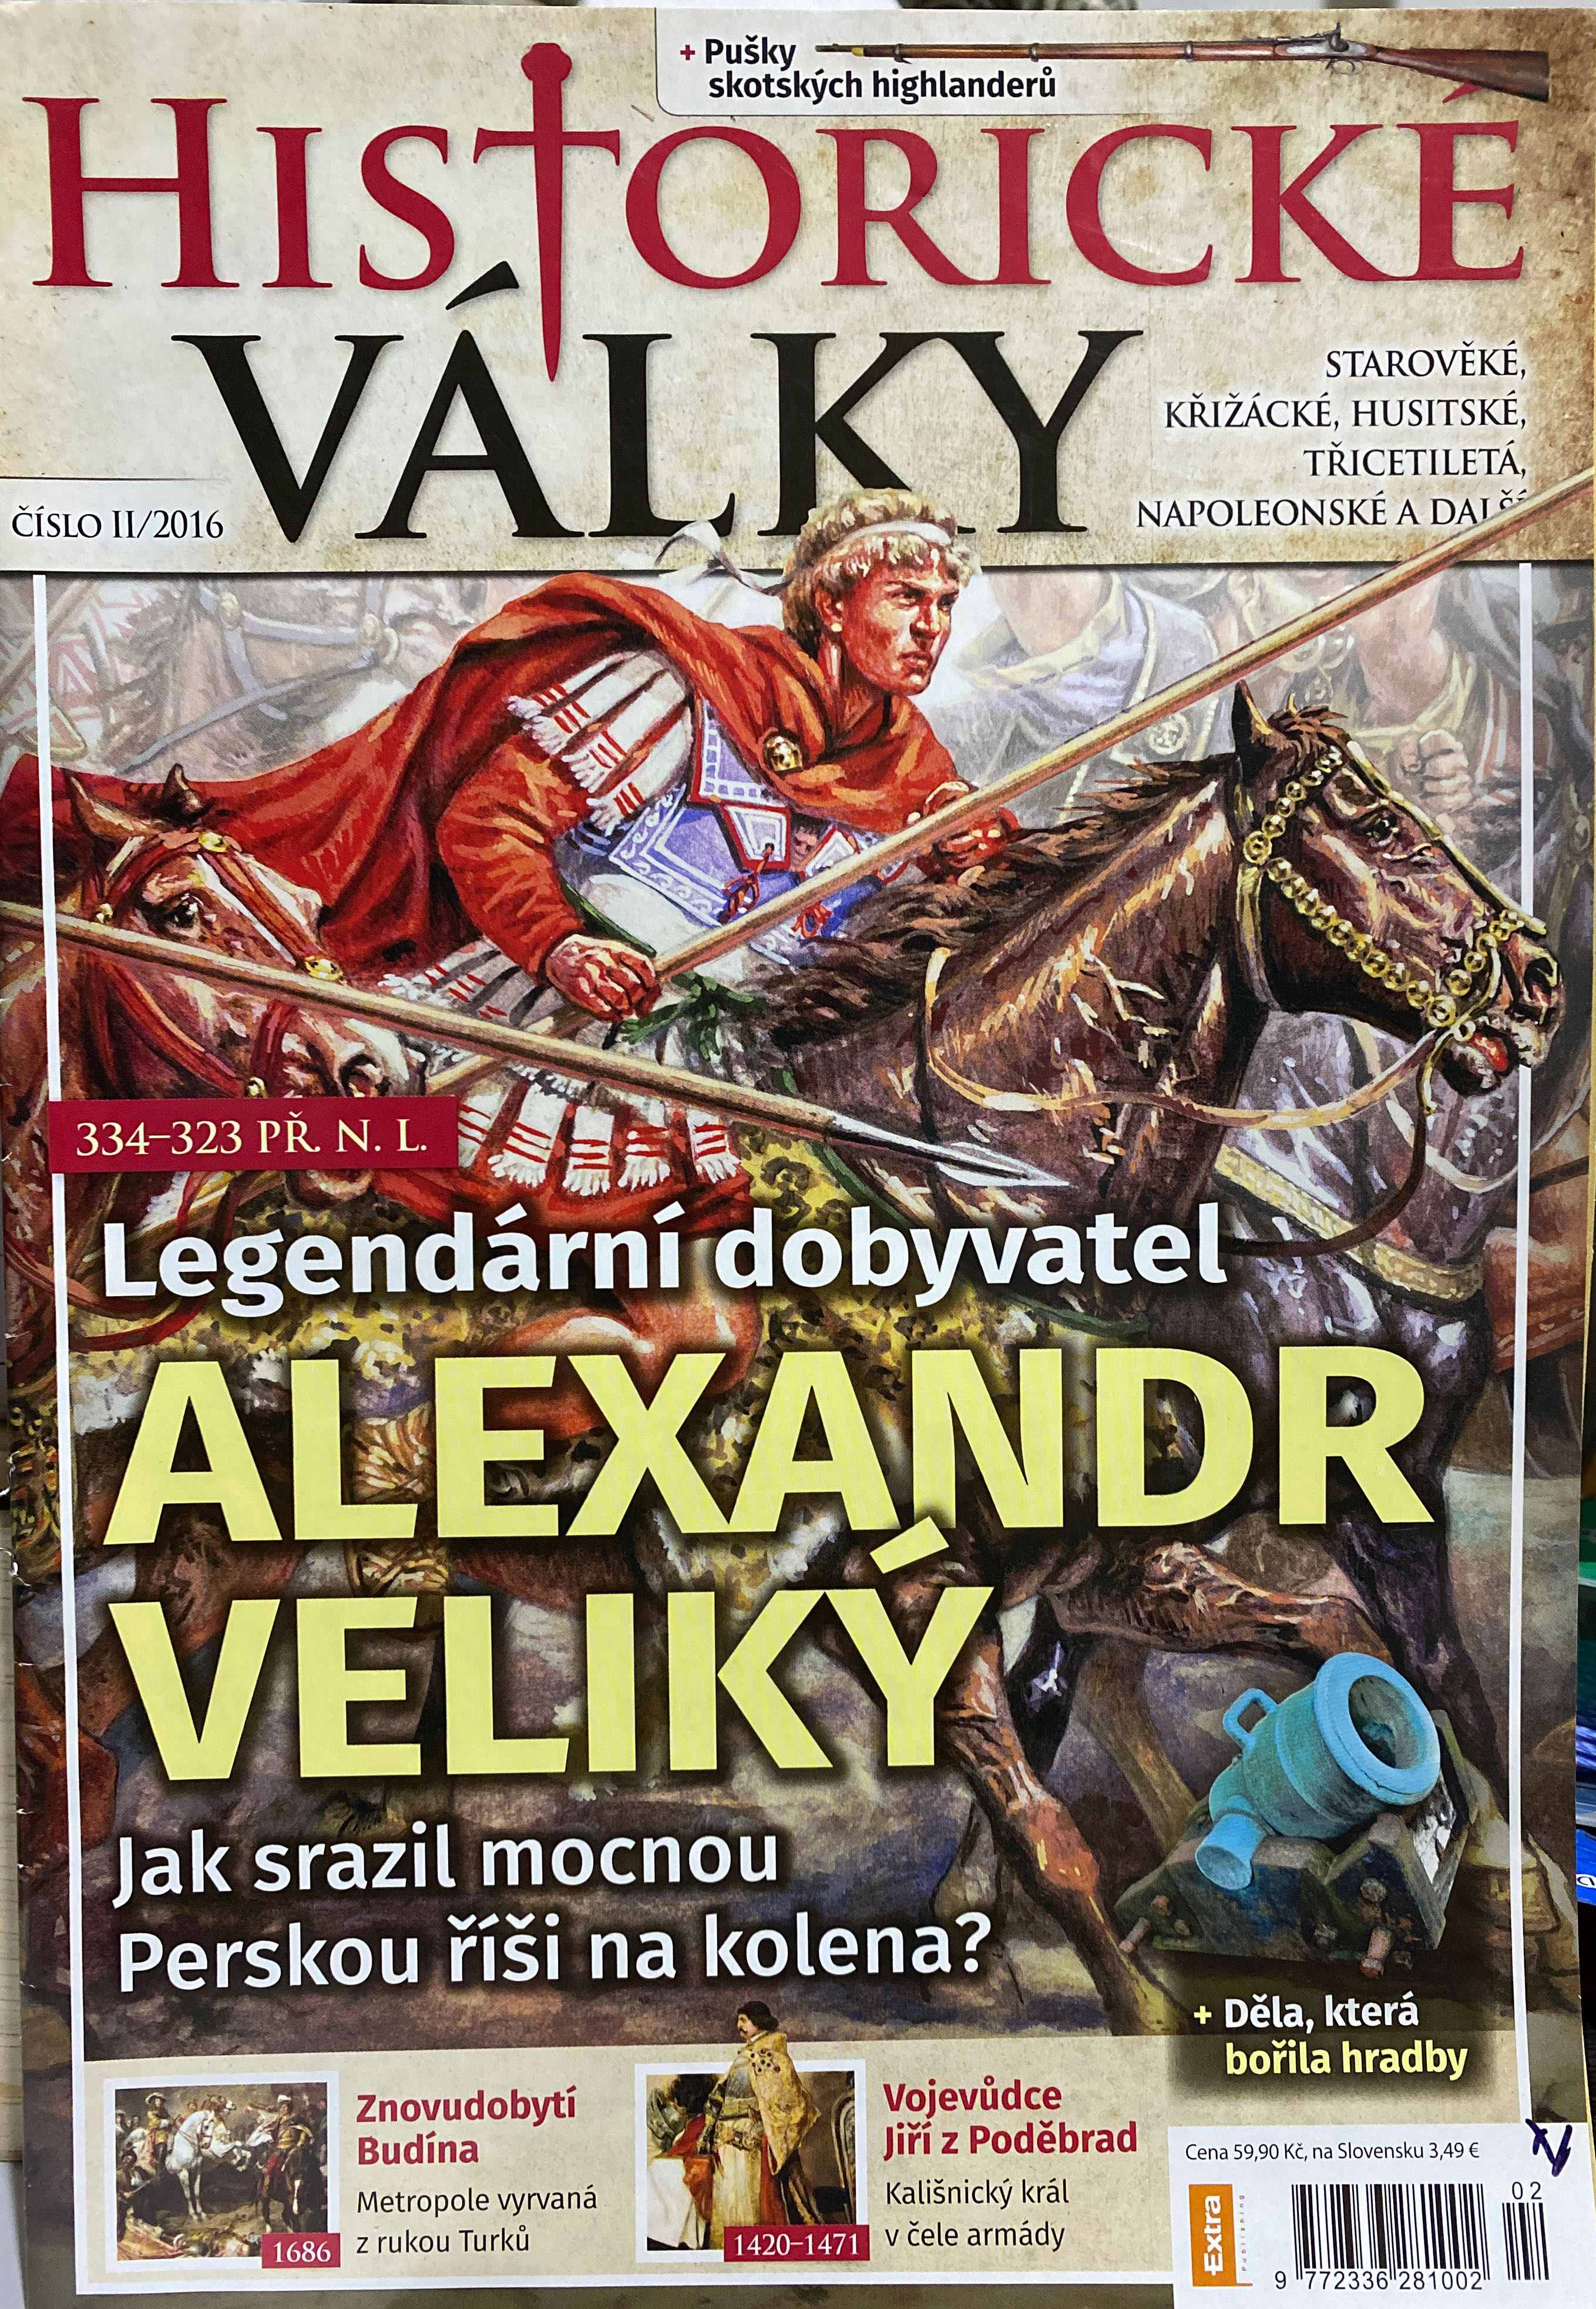 Historicke Valky  magazine collectible [Barcode 9772336281002] - Main Image 1